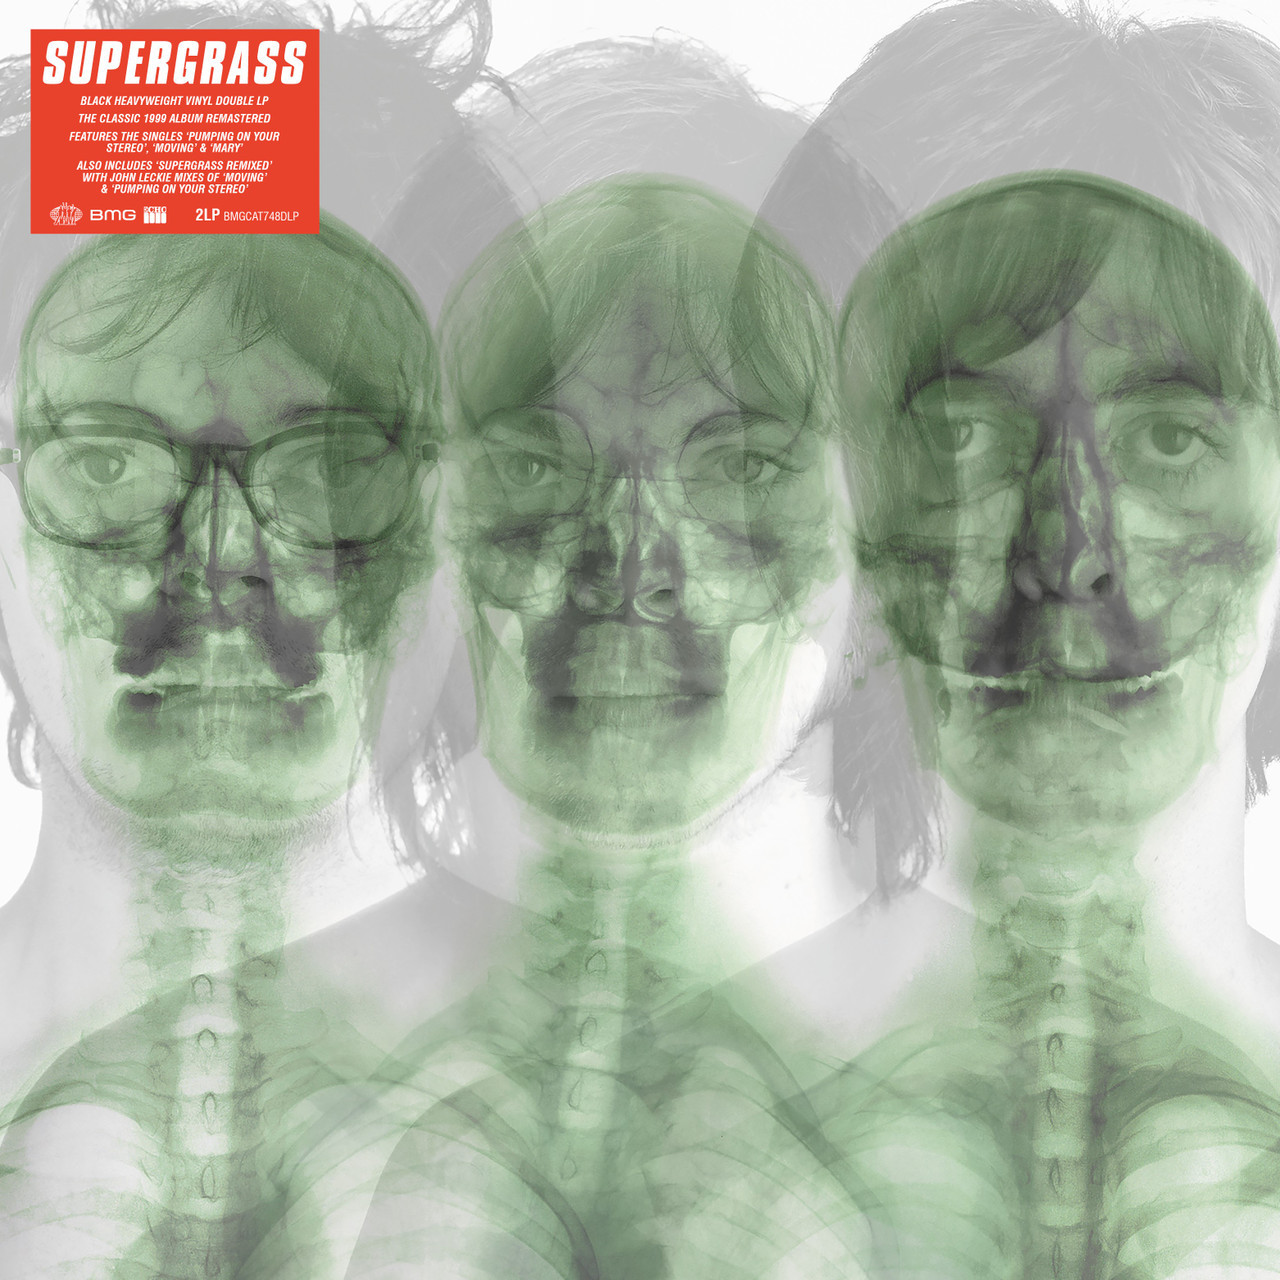 PRE-ORDER - Supergrass 'Supergrass' (Remastered) LP Black Vinyl - RELEASE DATE 16th September 2022